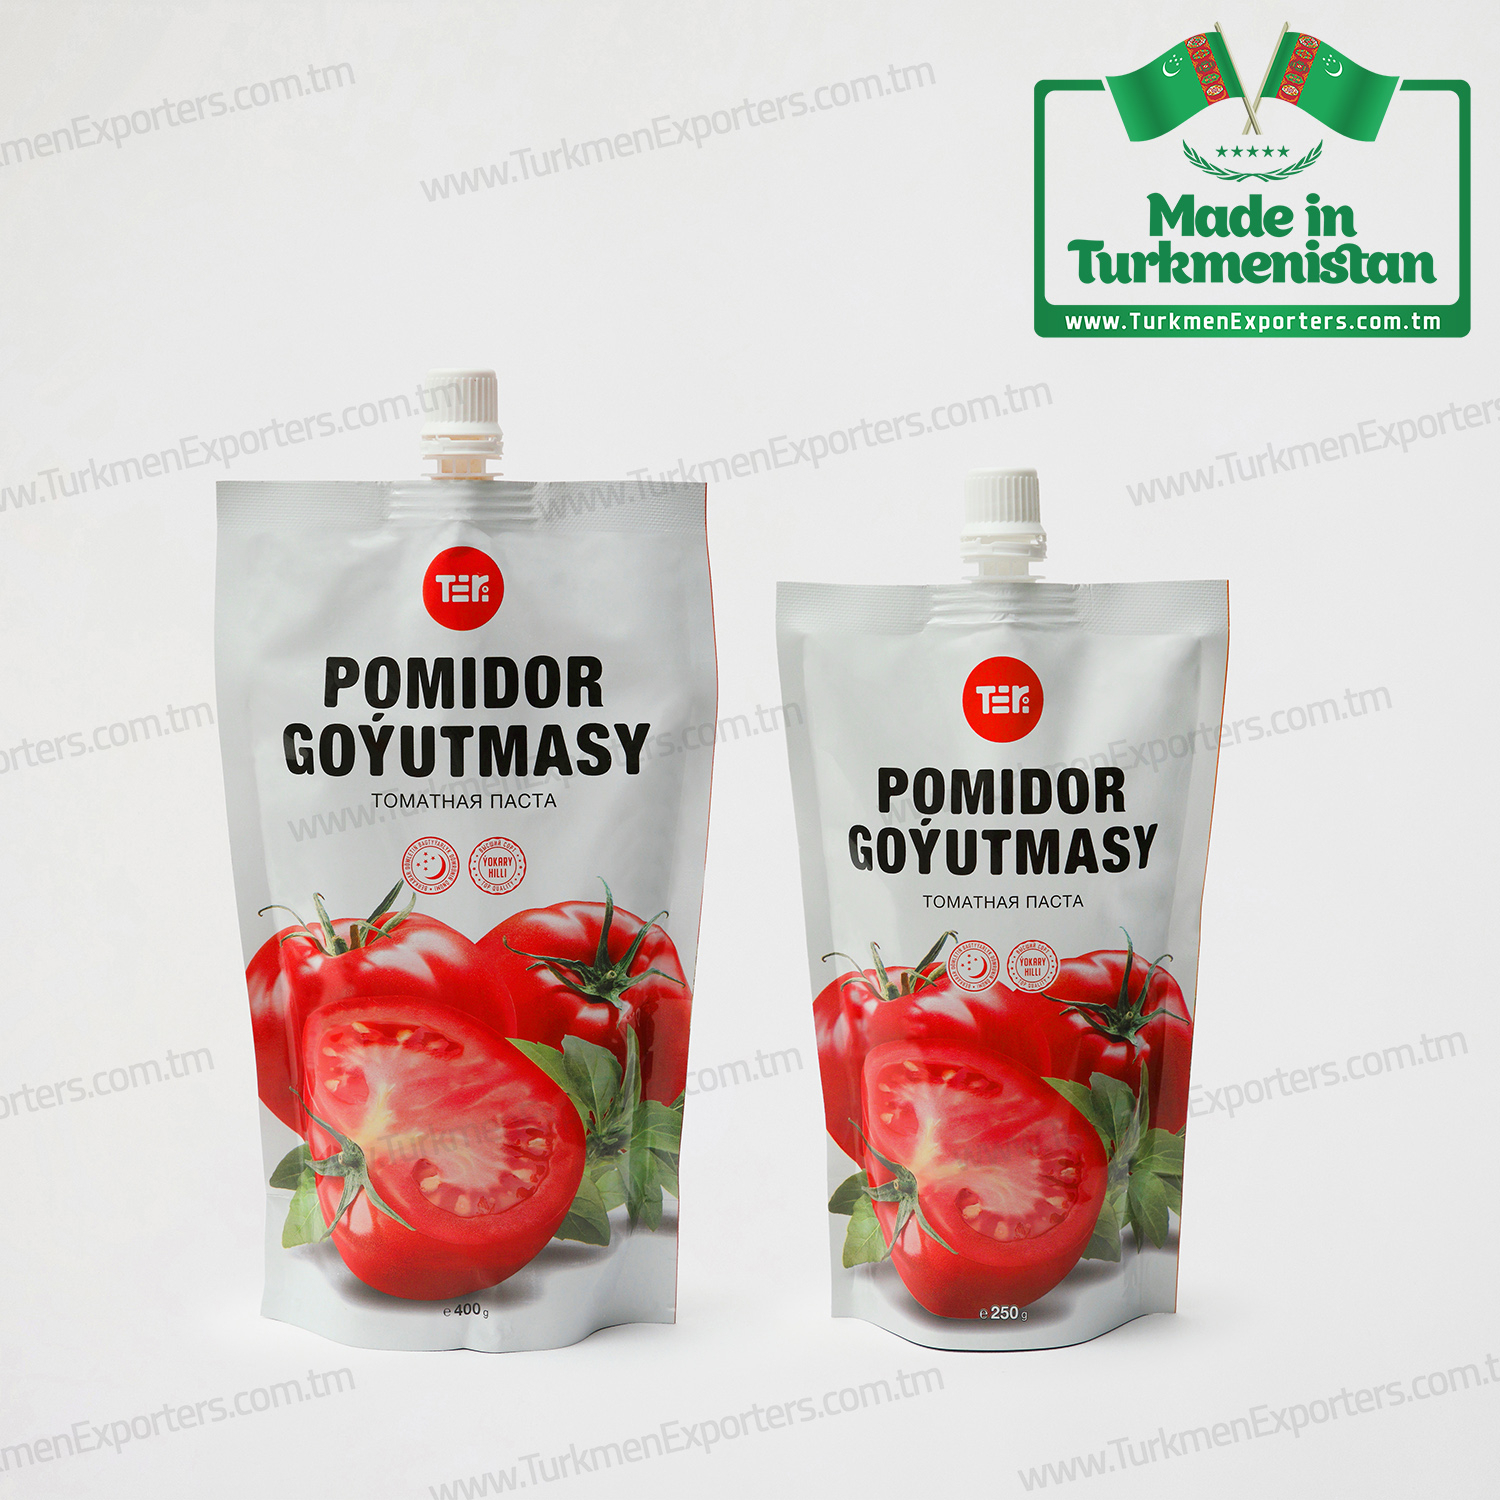 Türkmenistanada öndürilen Pomidor goýutmasy Teri  | Aýly Ýaz HJ